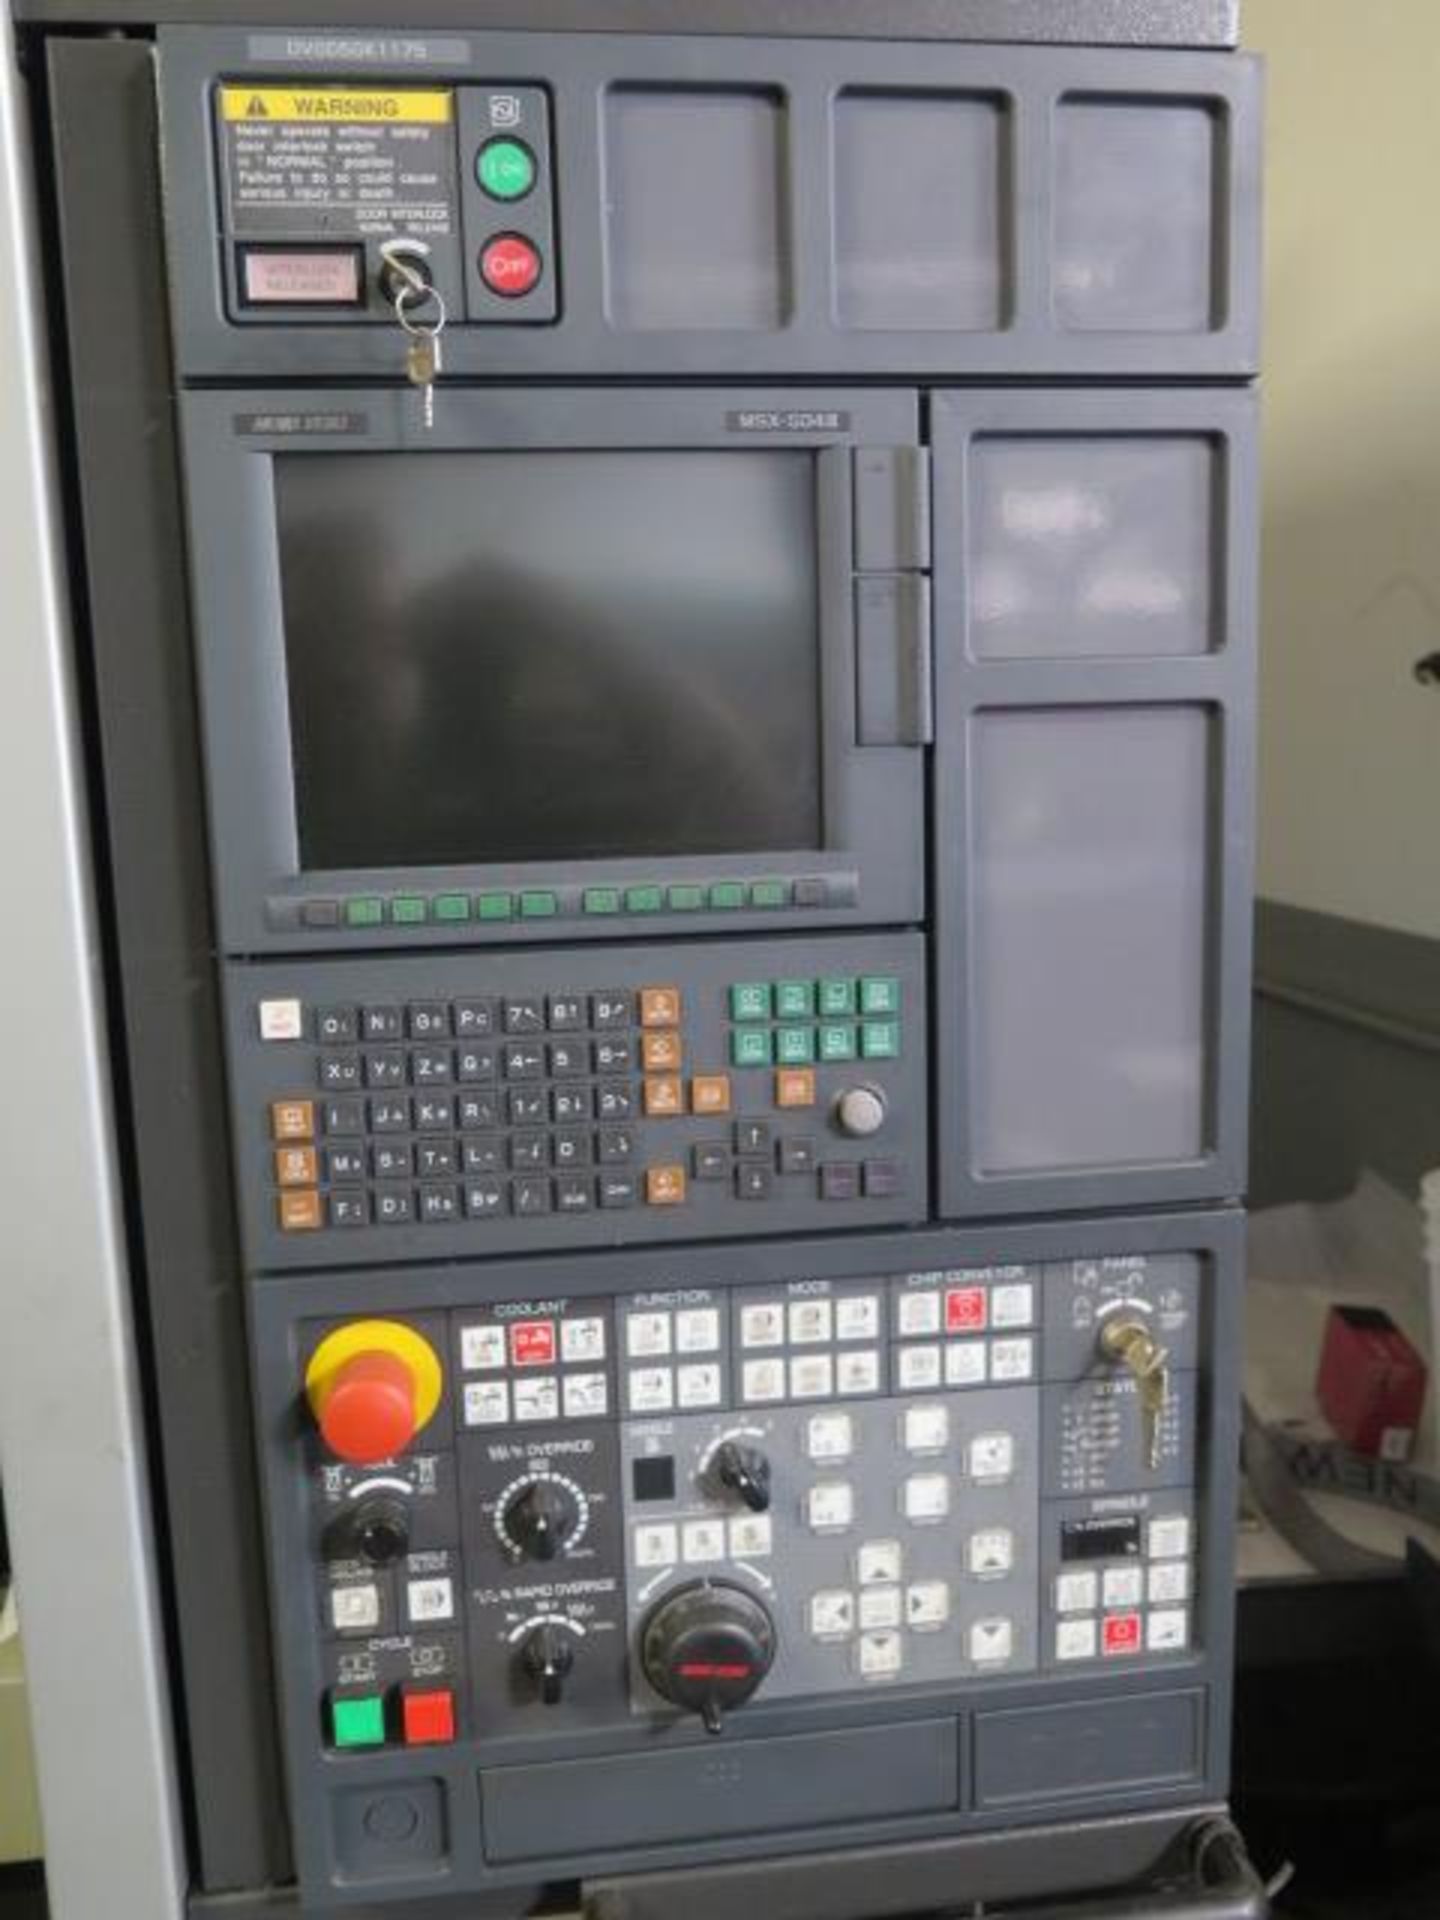 2007 Mori Seiki “DuraVertical 5060” CNC Vertical Machining Center s/n DV005GK1175 SOLD AS IS - Image 11 of 22